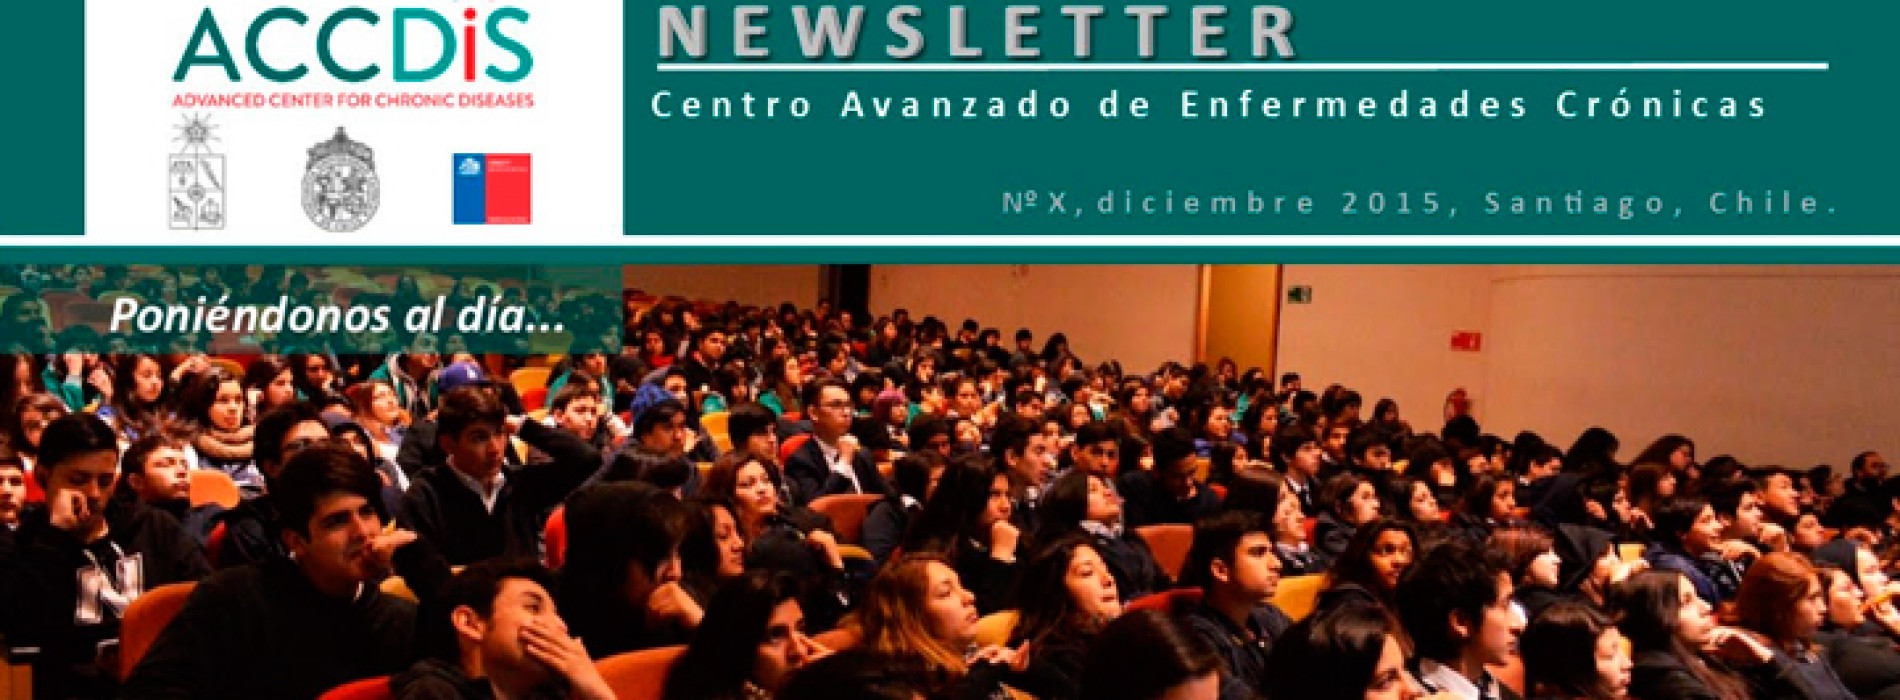 Newsletter ACCDiS, Nº X diciembre 2015